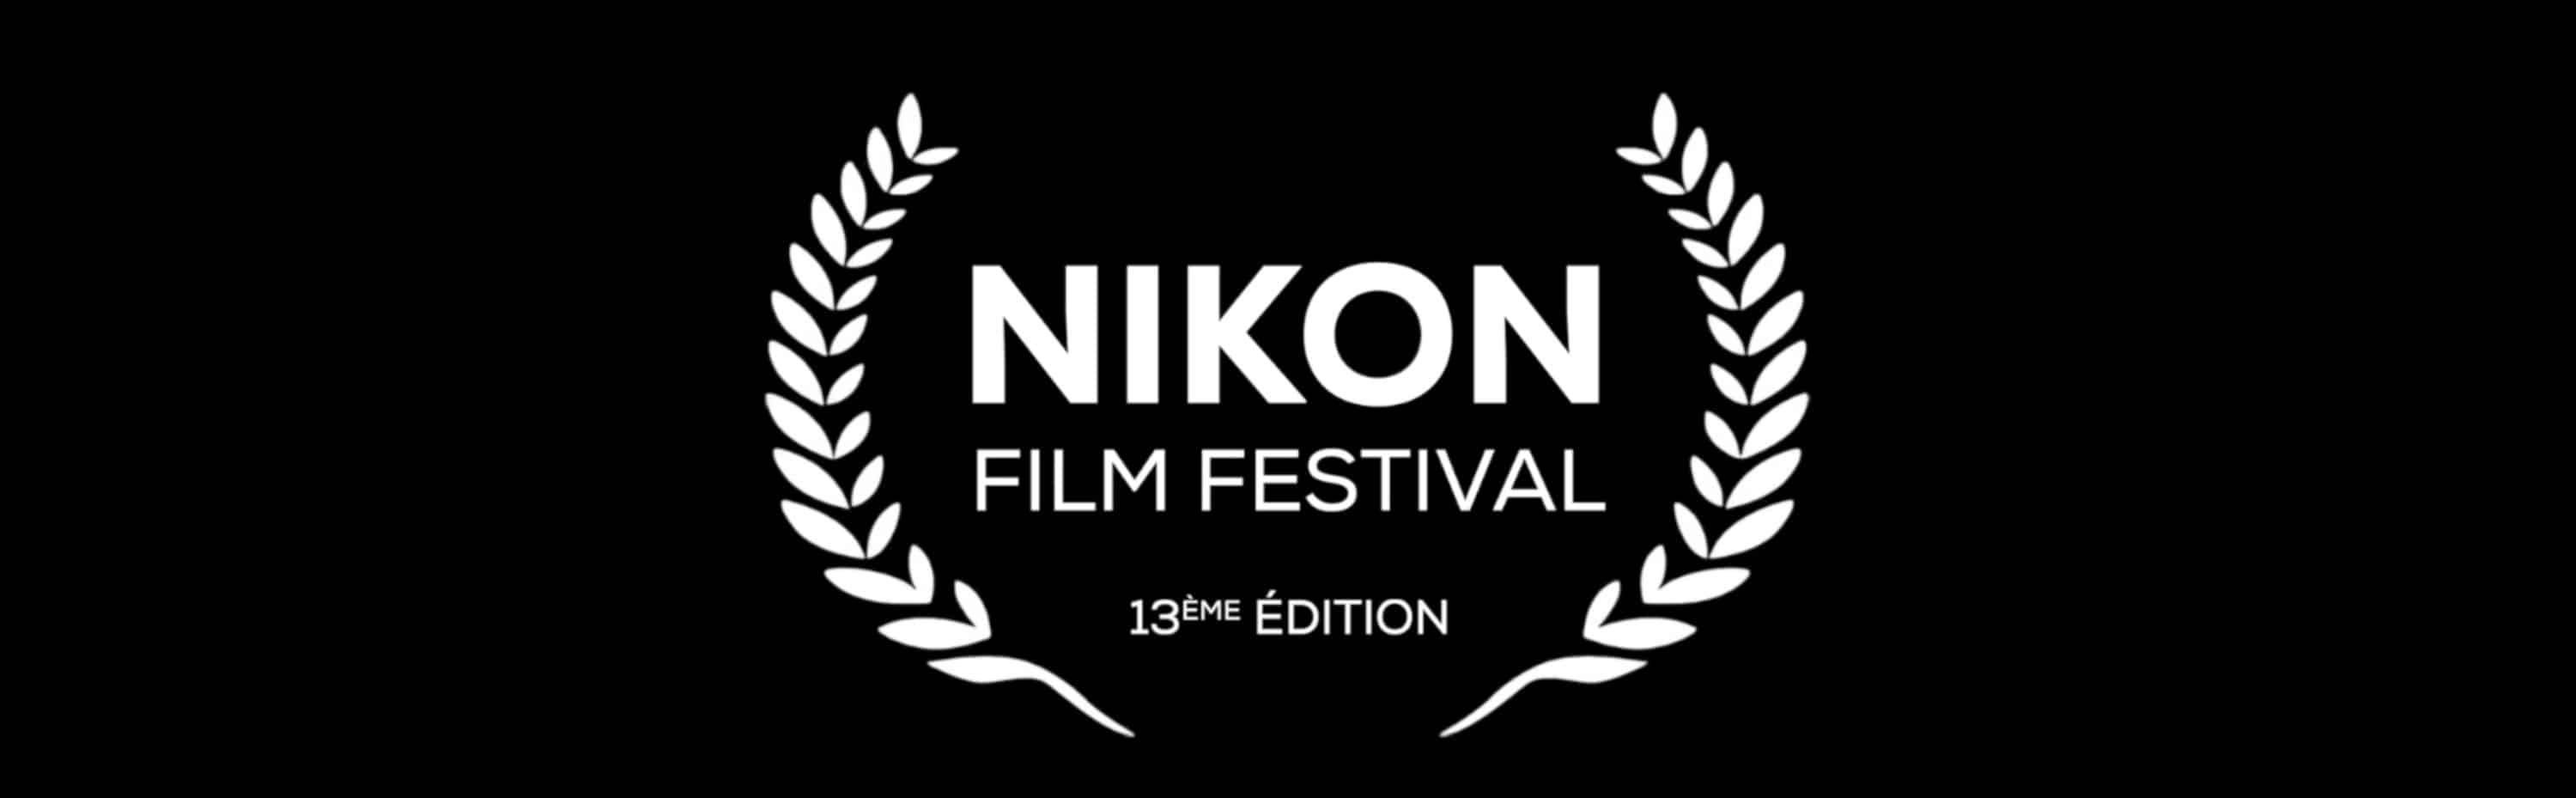 Nikon-Film-Festival-13-bis